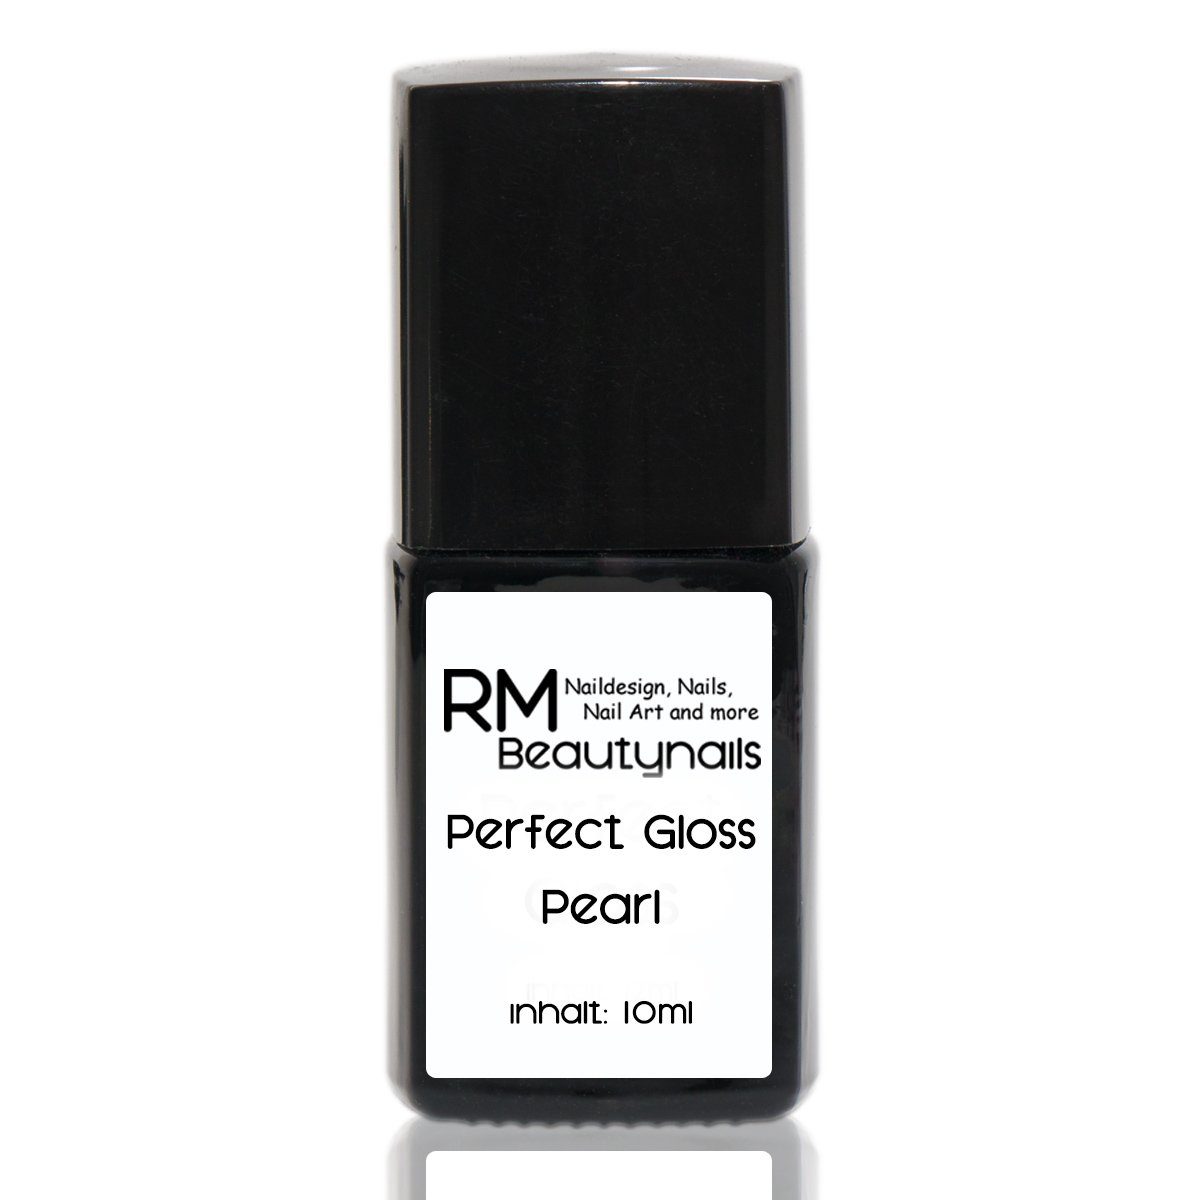 RM Beautynails UV-Gel Perfect Gloss Glanz UV-Gel Led Nagelgel Quickfinish Finishgel, vegan Perfekt Gloss Pearl